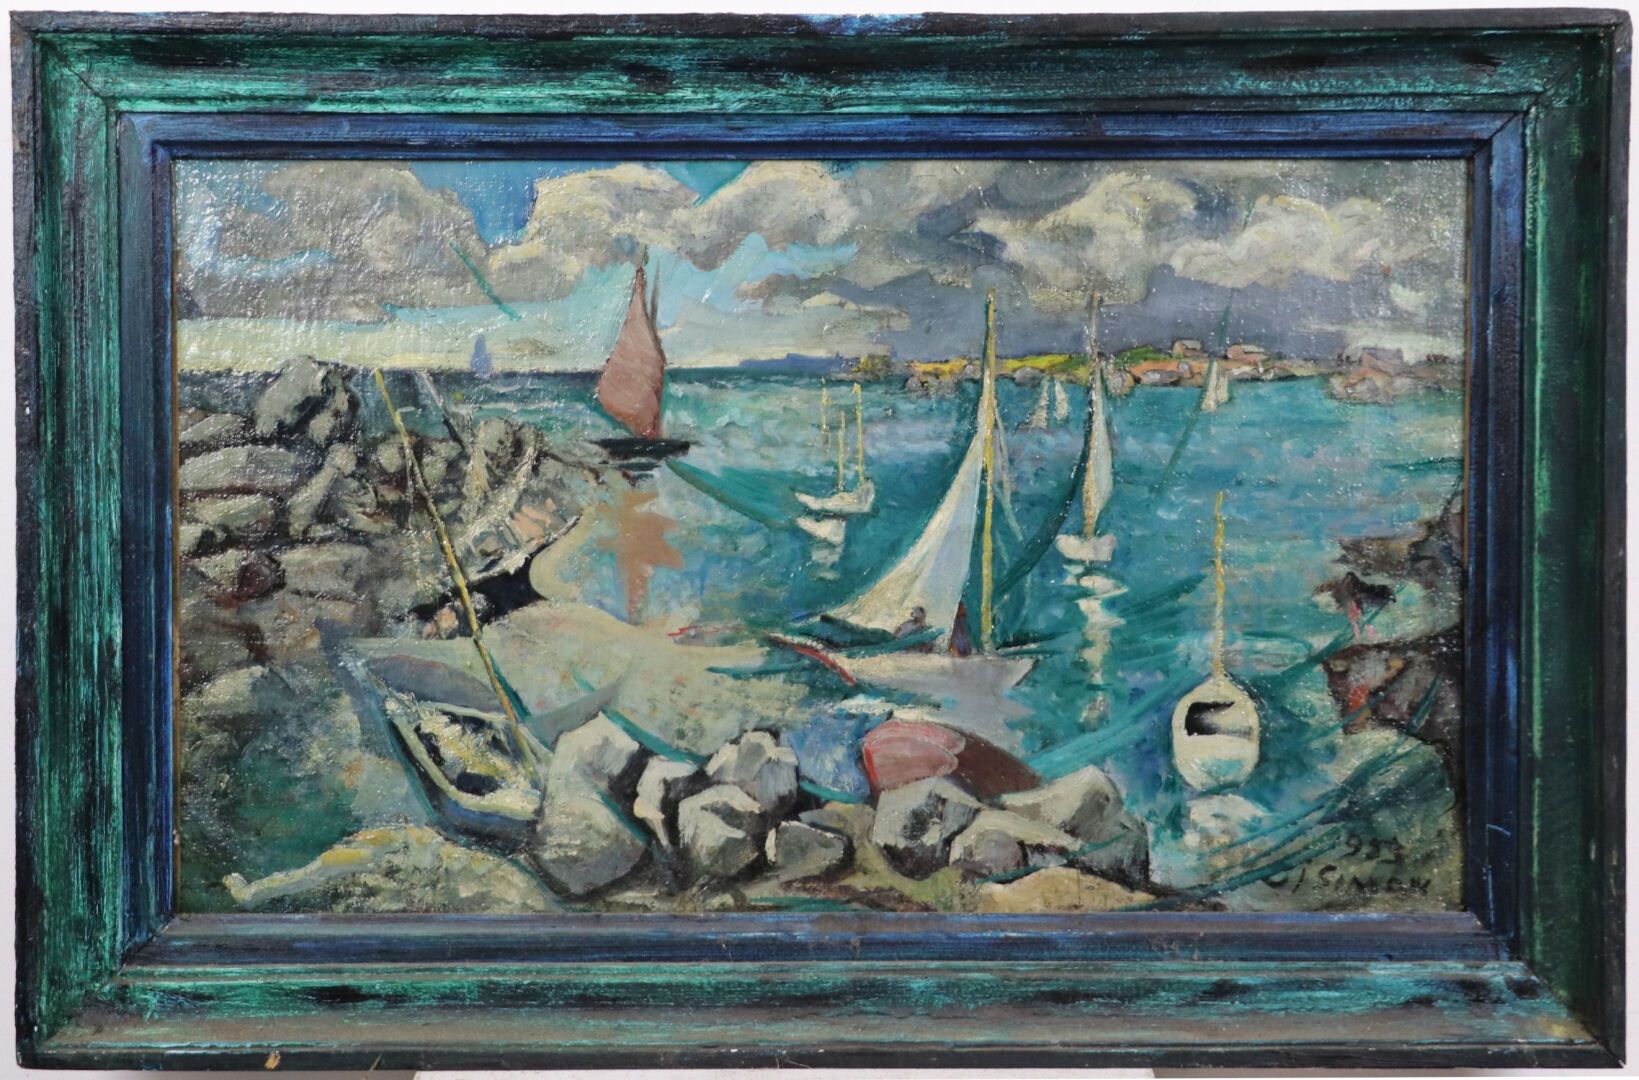 Null 路易斯-西蒙（1892-1960）。

布里格诺根，菲尼斯泰尔。

布面油画，右下方有签名，日期为1953年。

高_33厘米，宽_55厘米